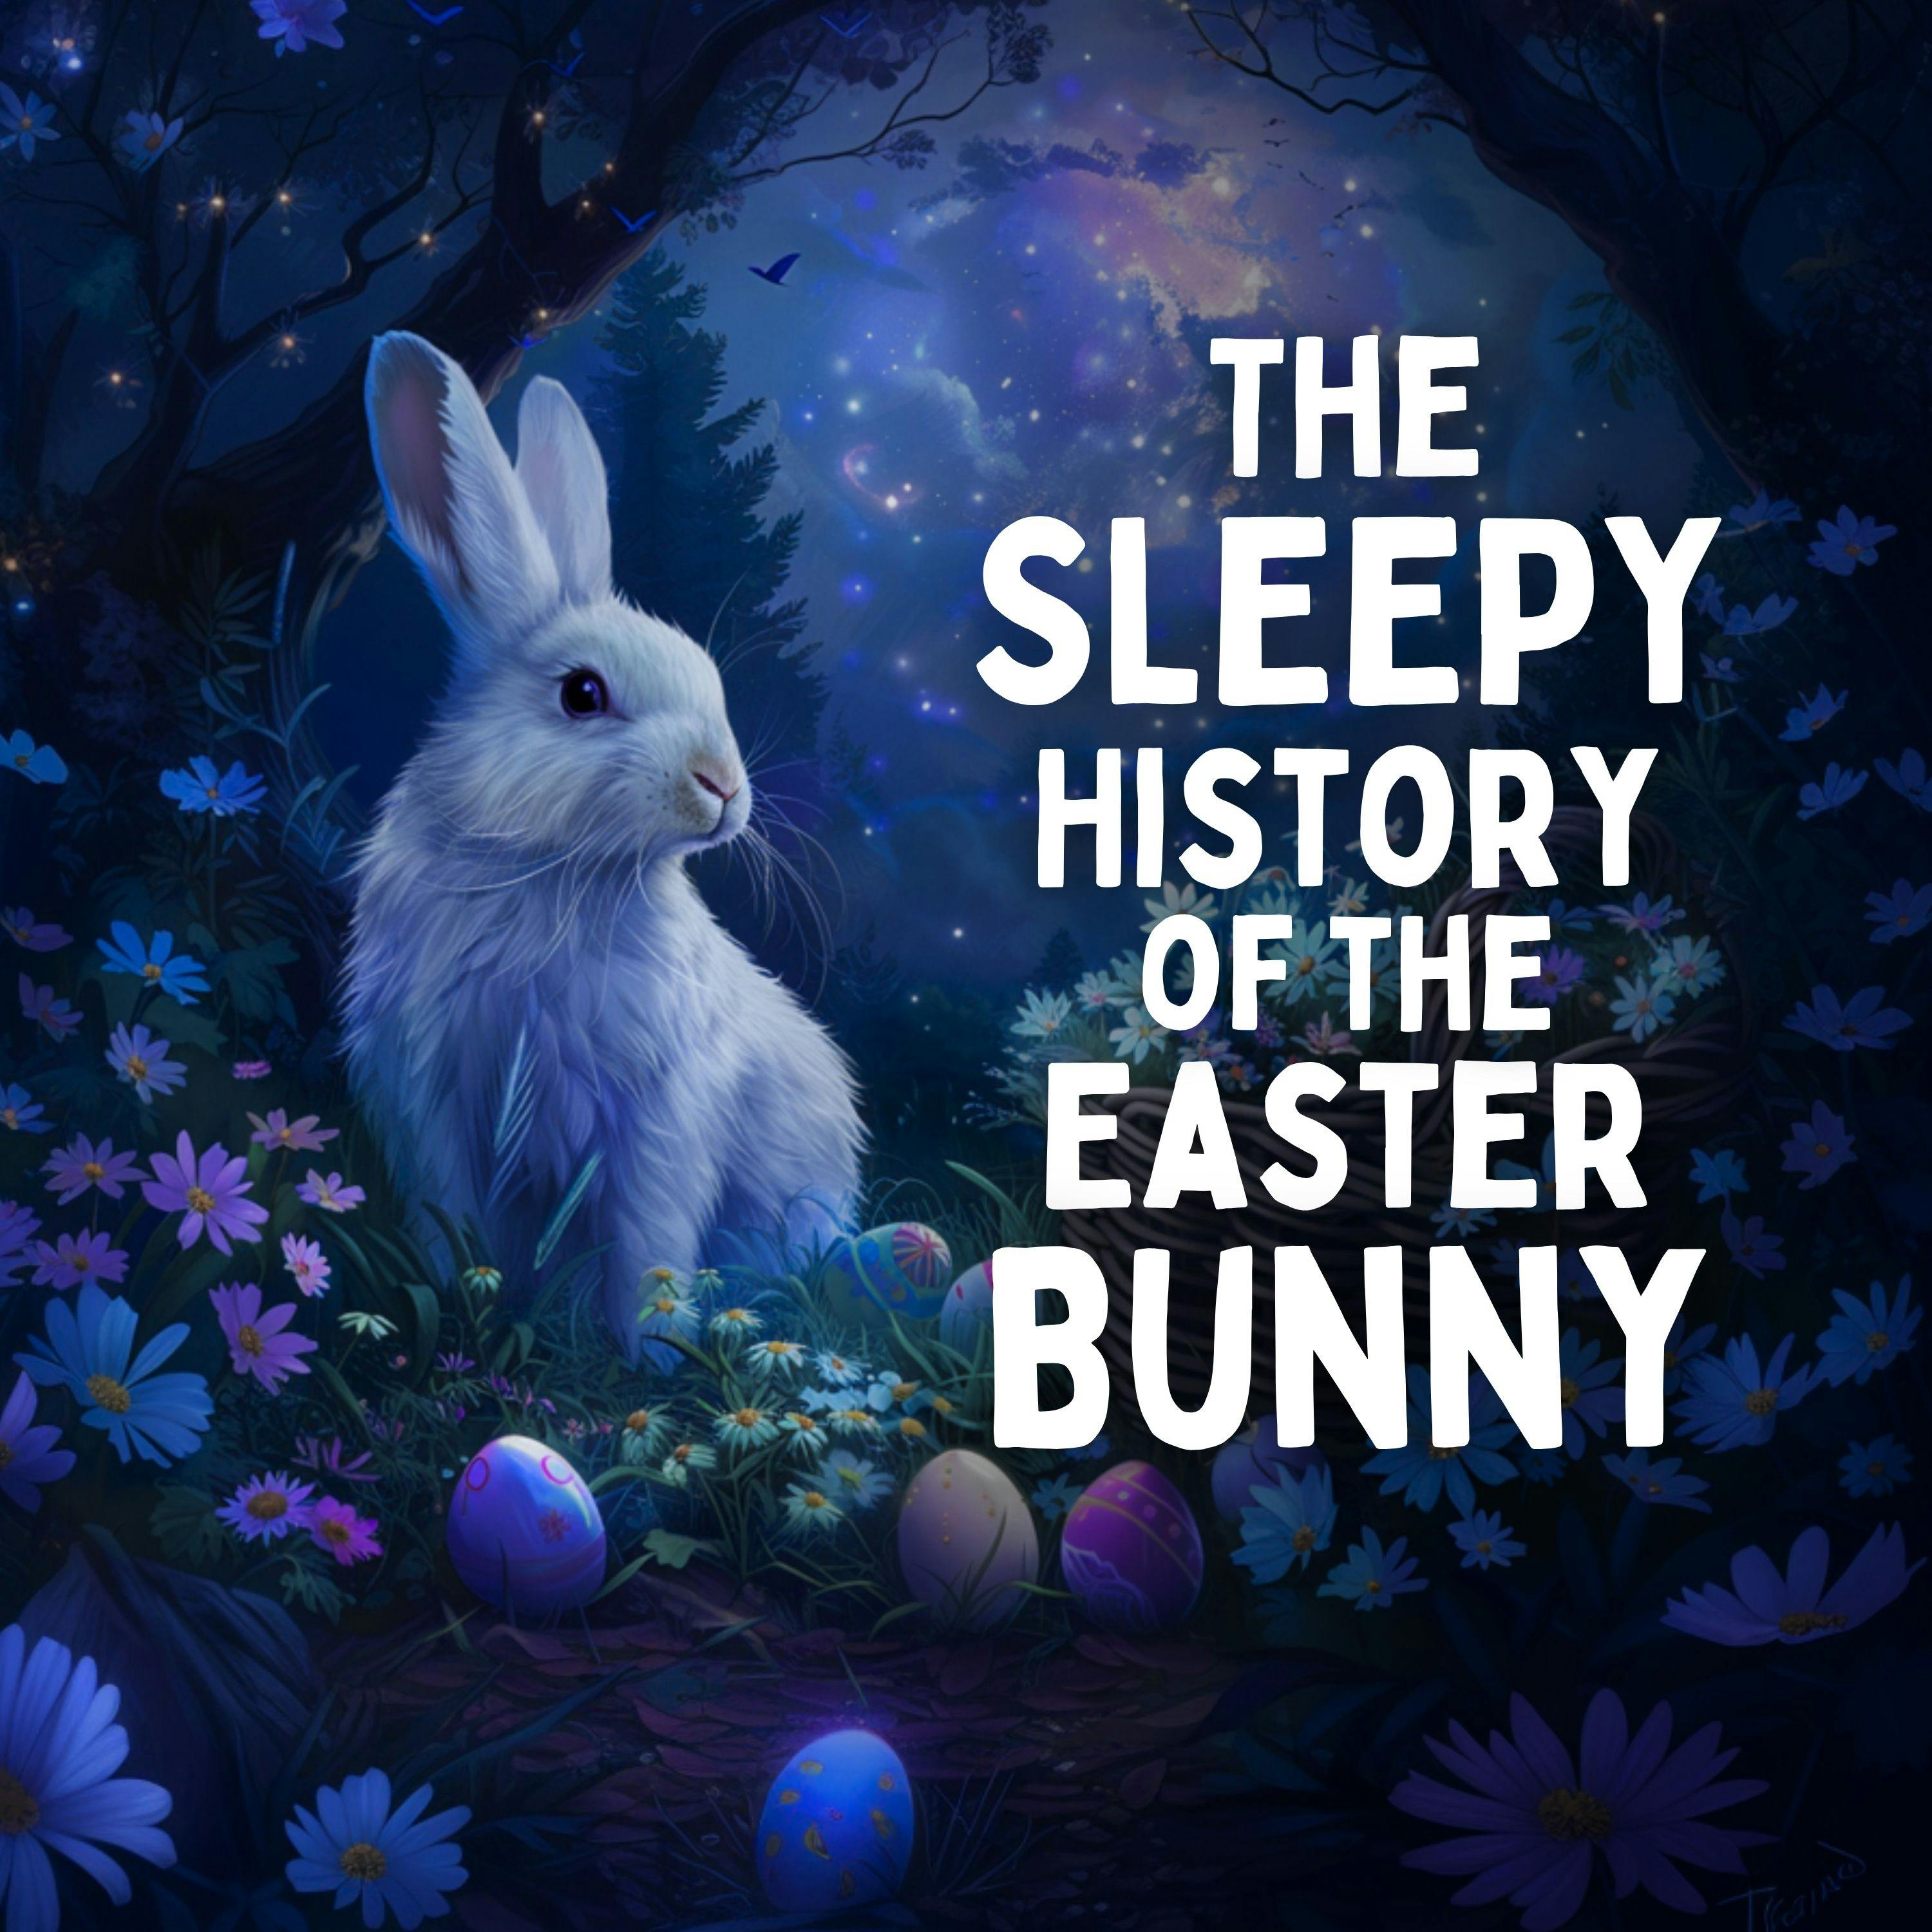 The Sleepy History of the Easter Bunny